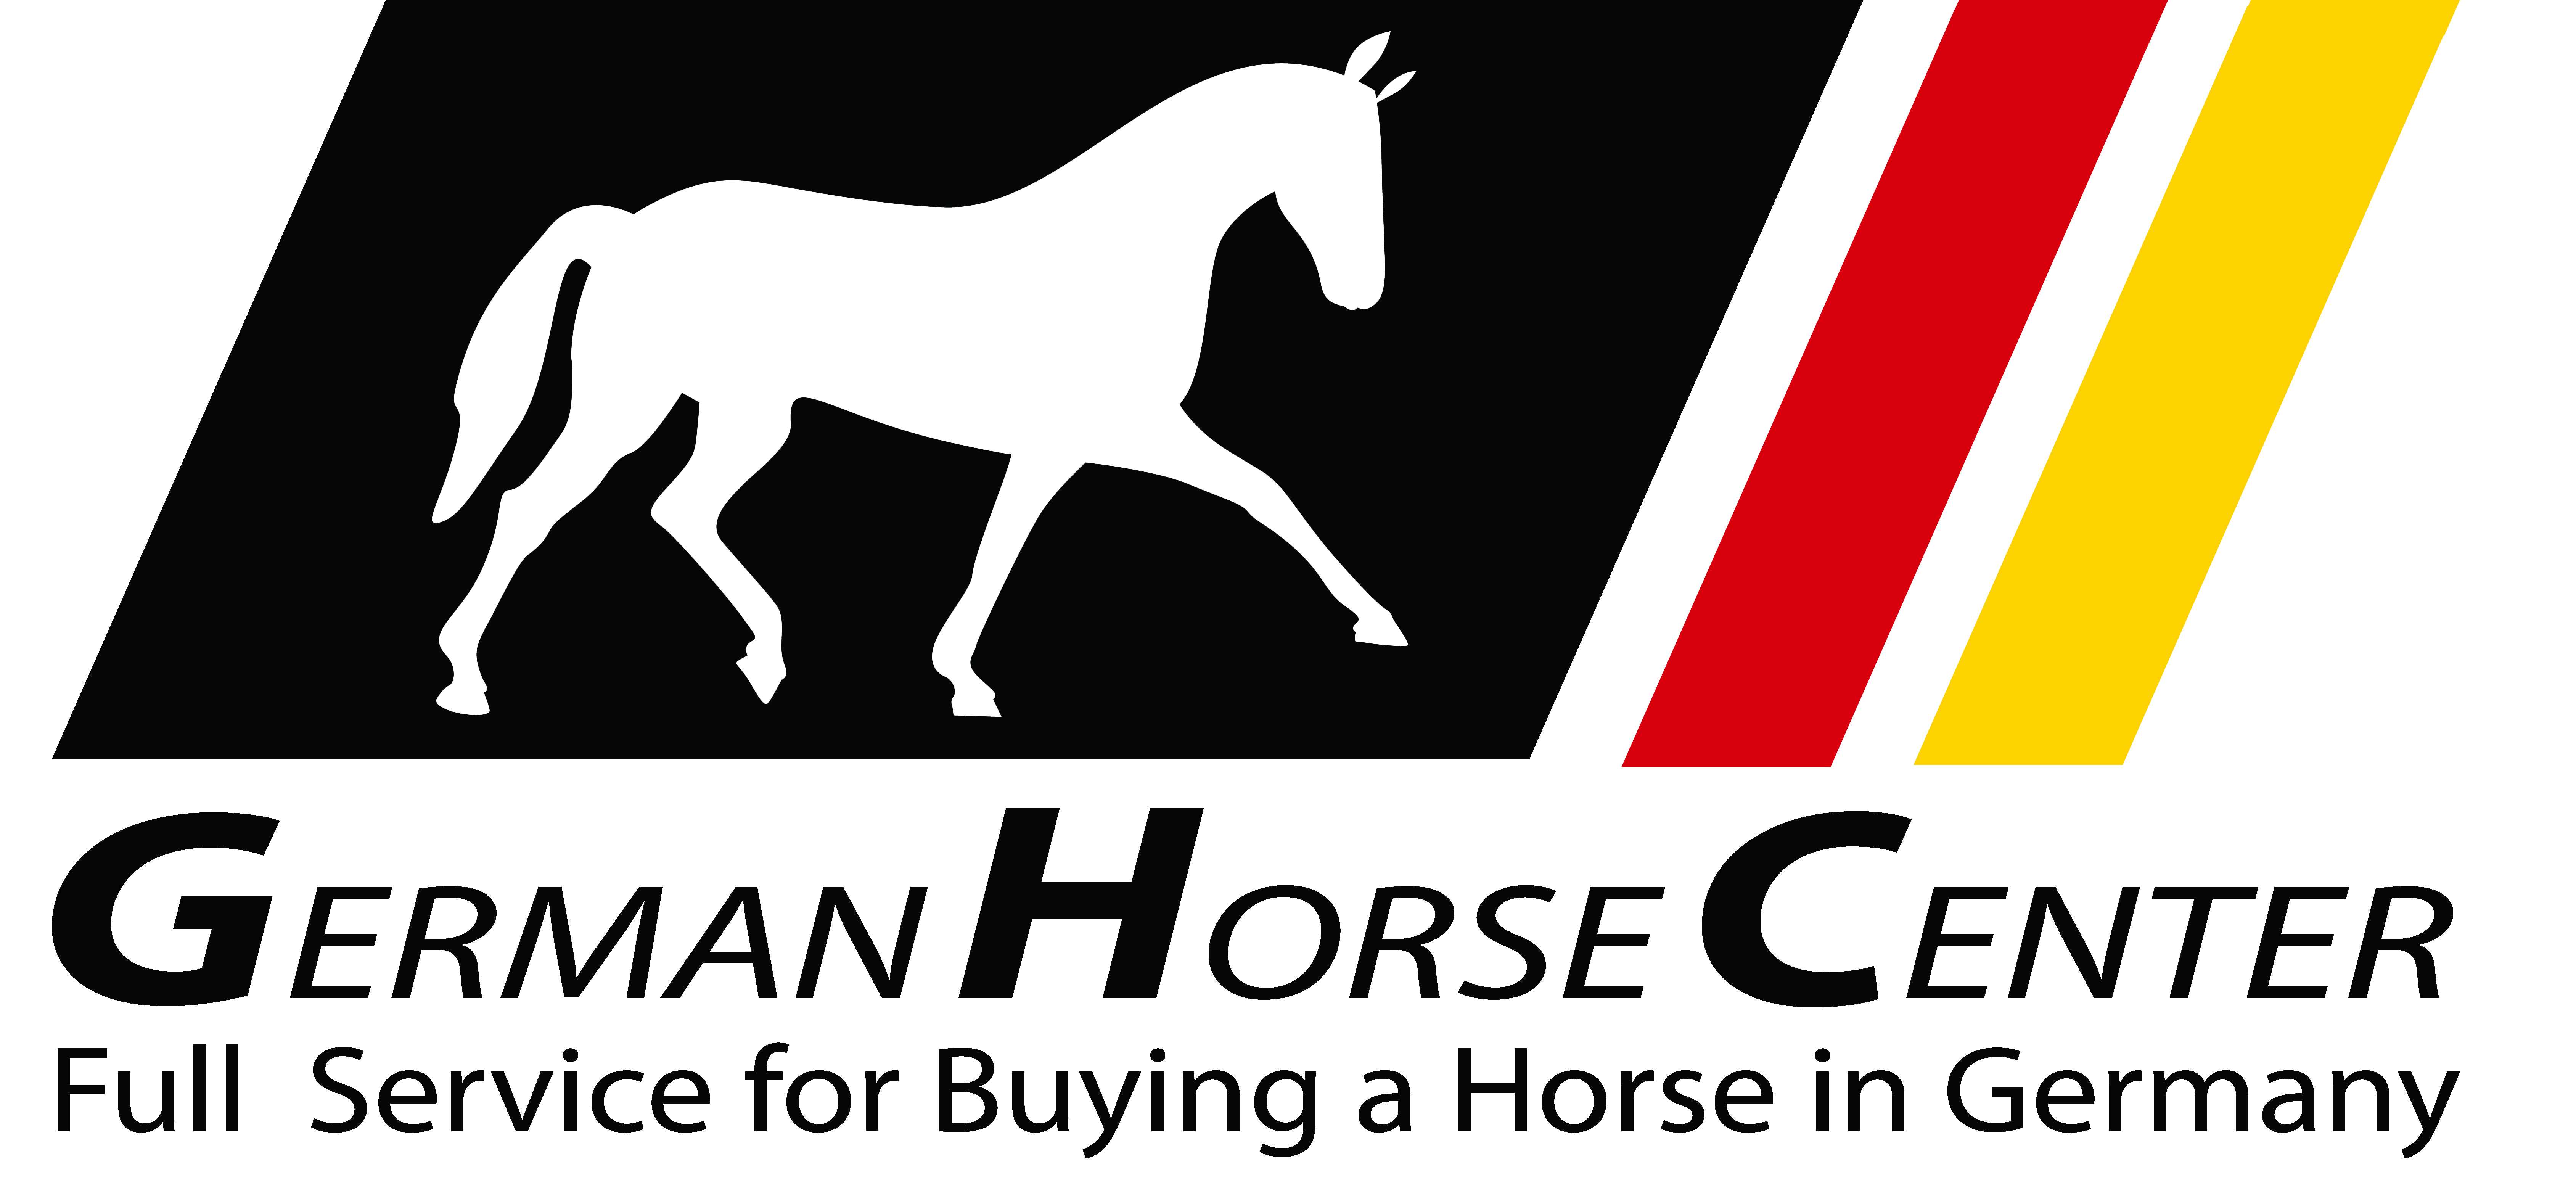 German Logo - Corporate Information - German Horse Center